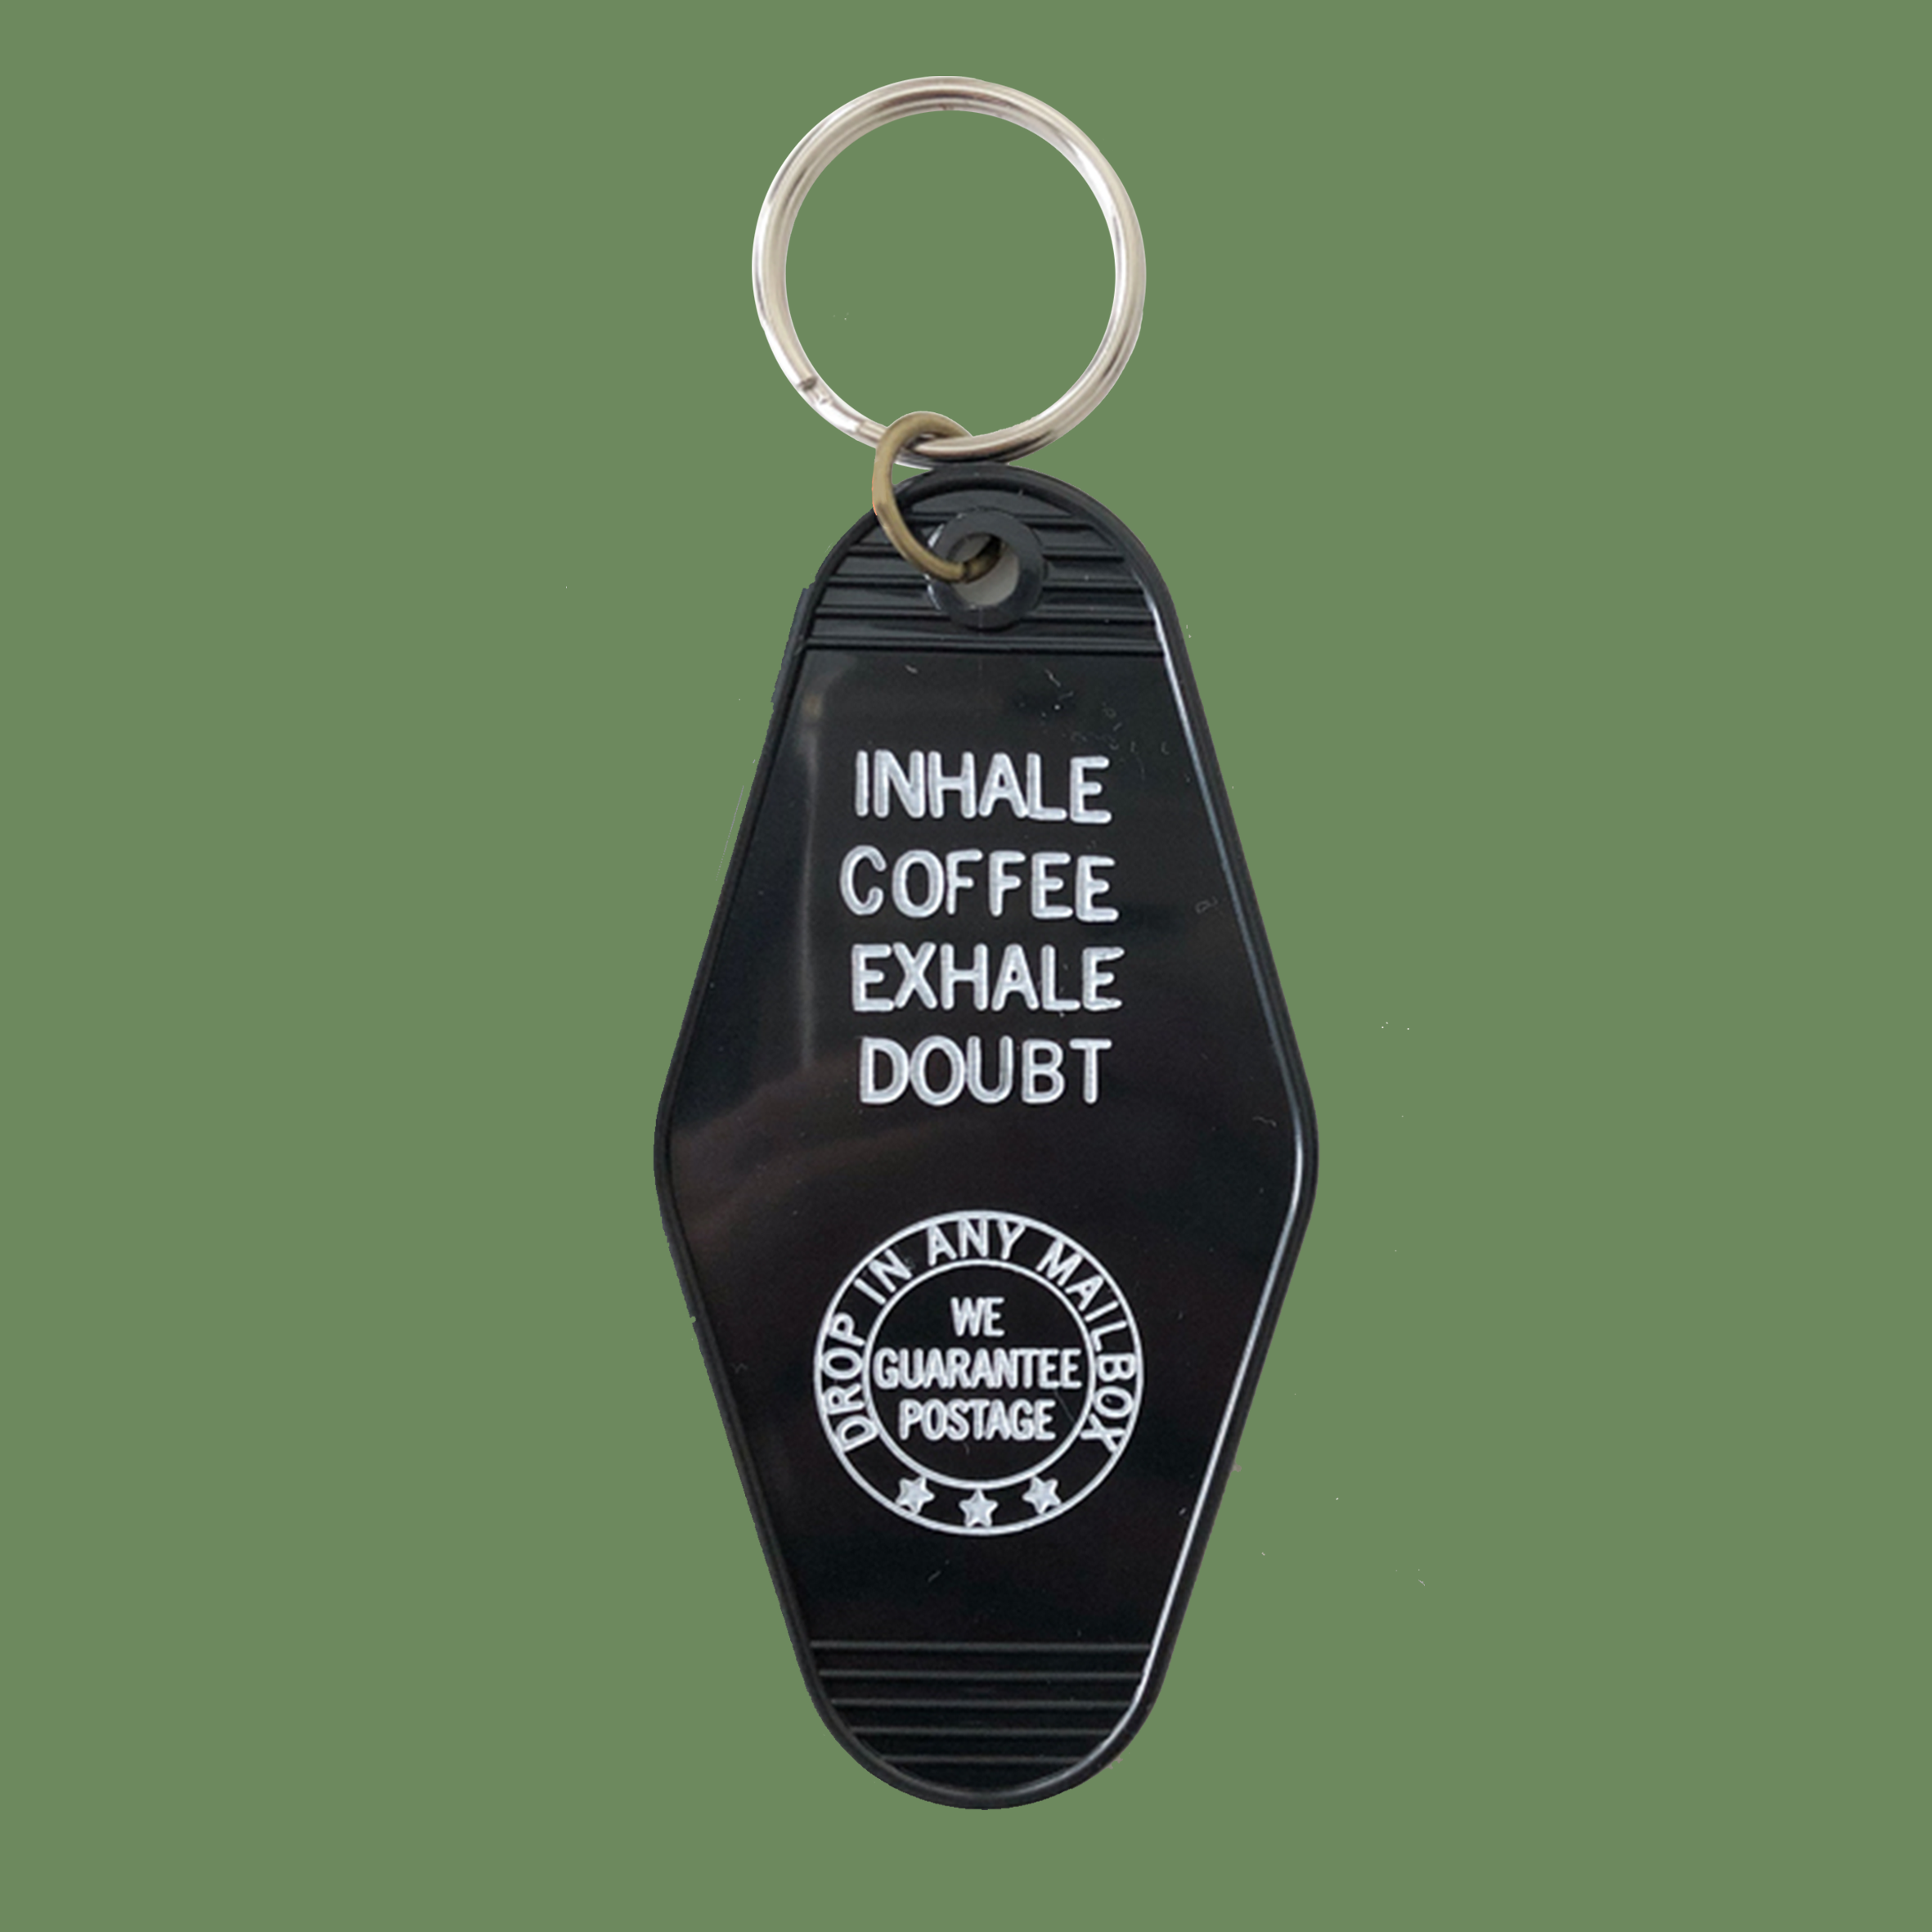 Inhale Coffee Exhale Doubt Key Tag